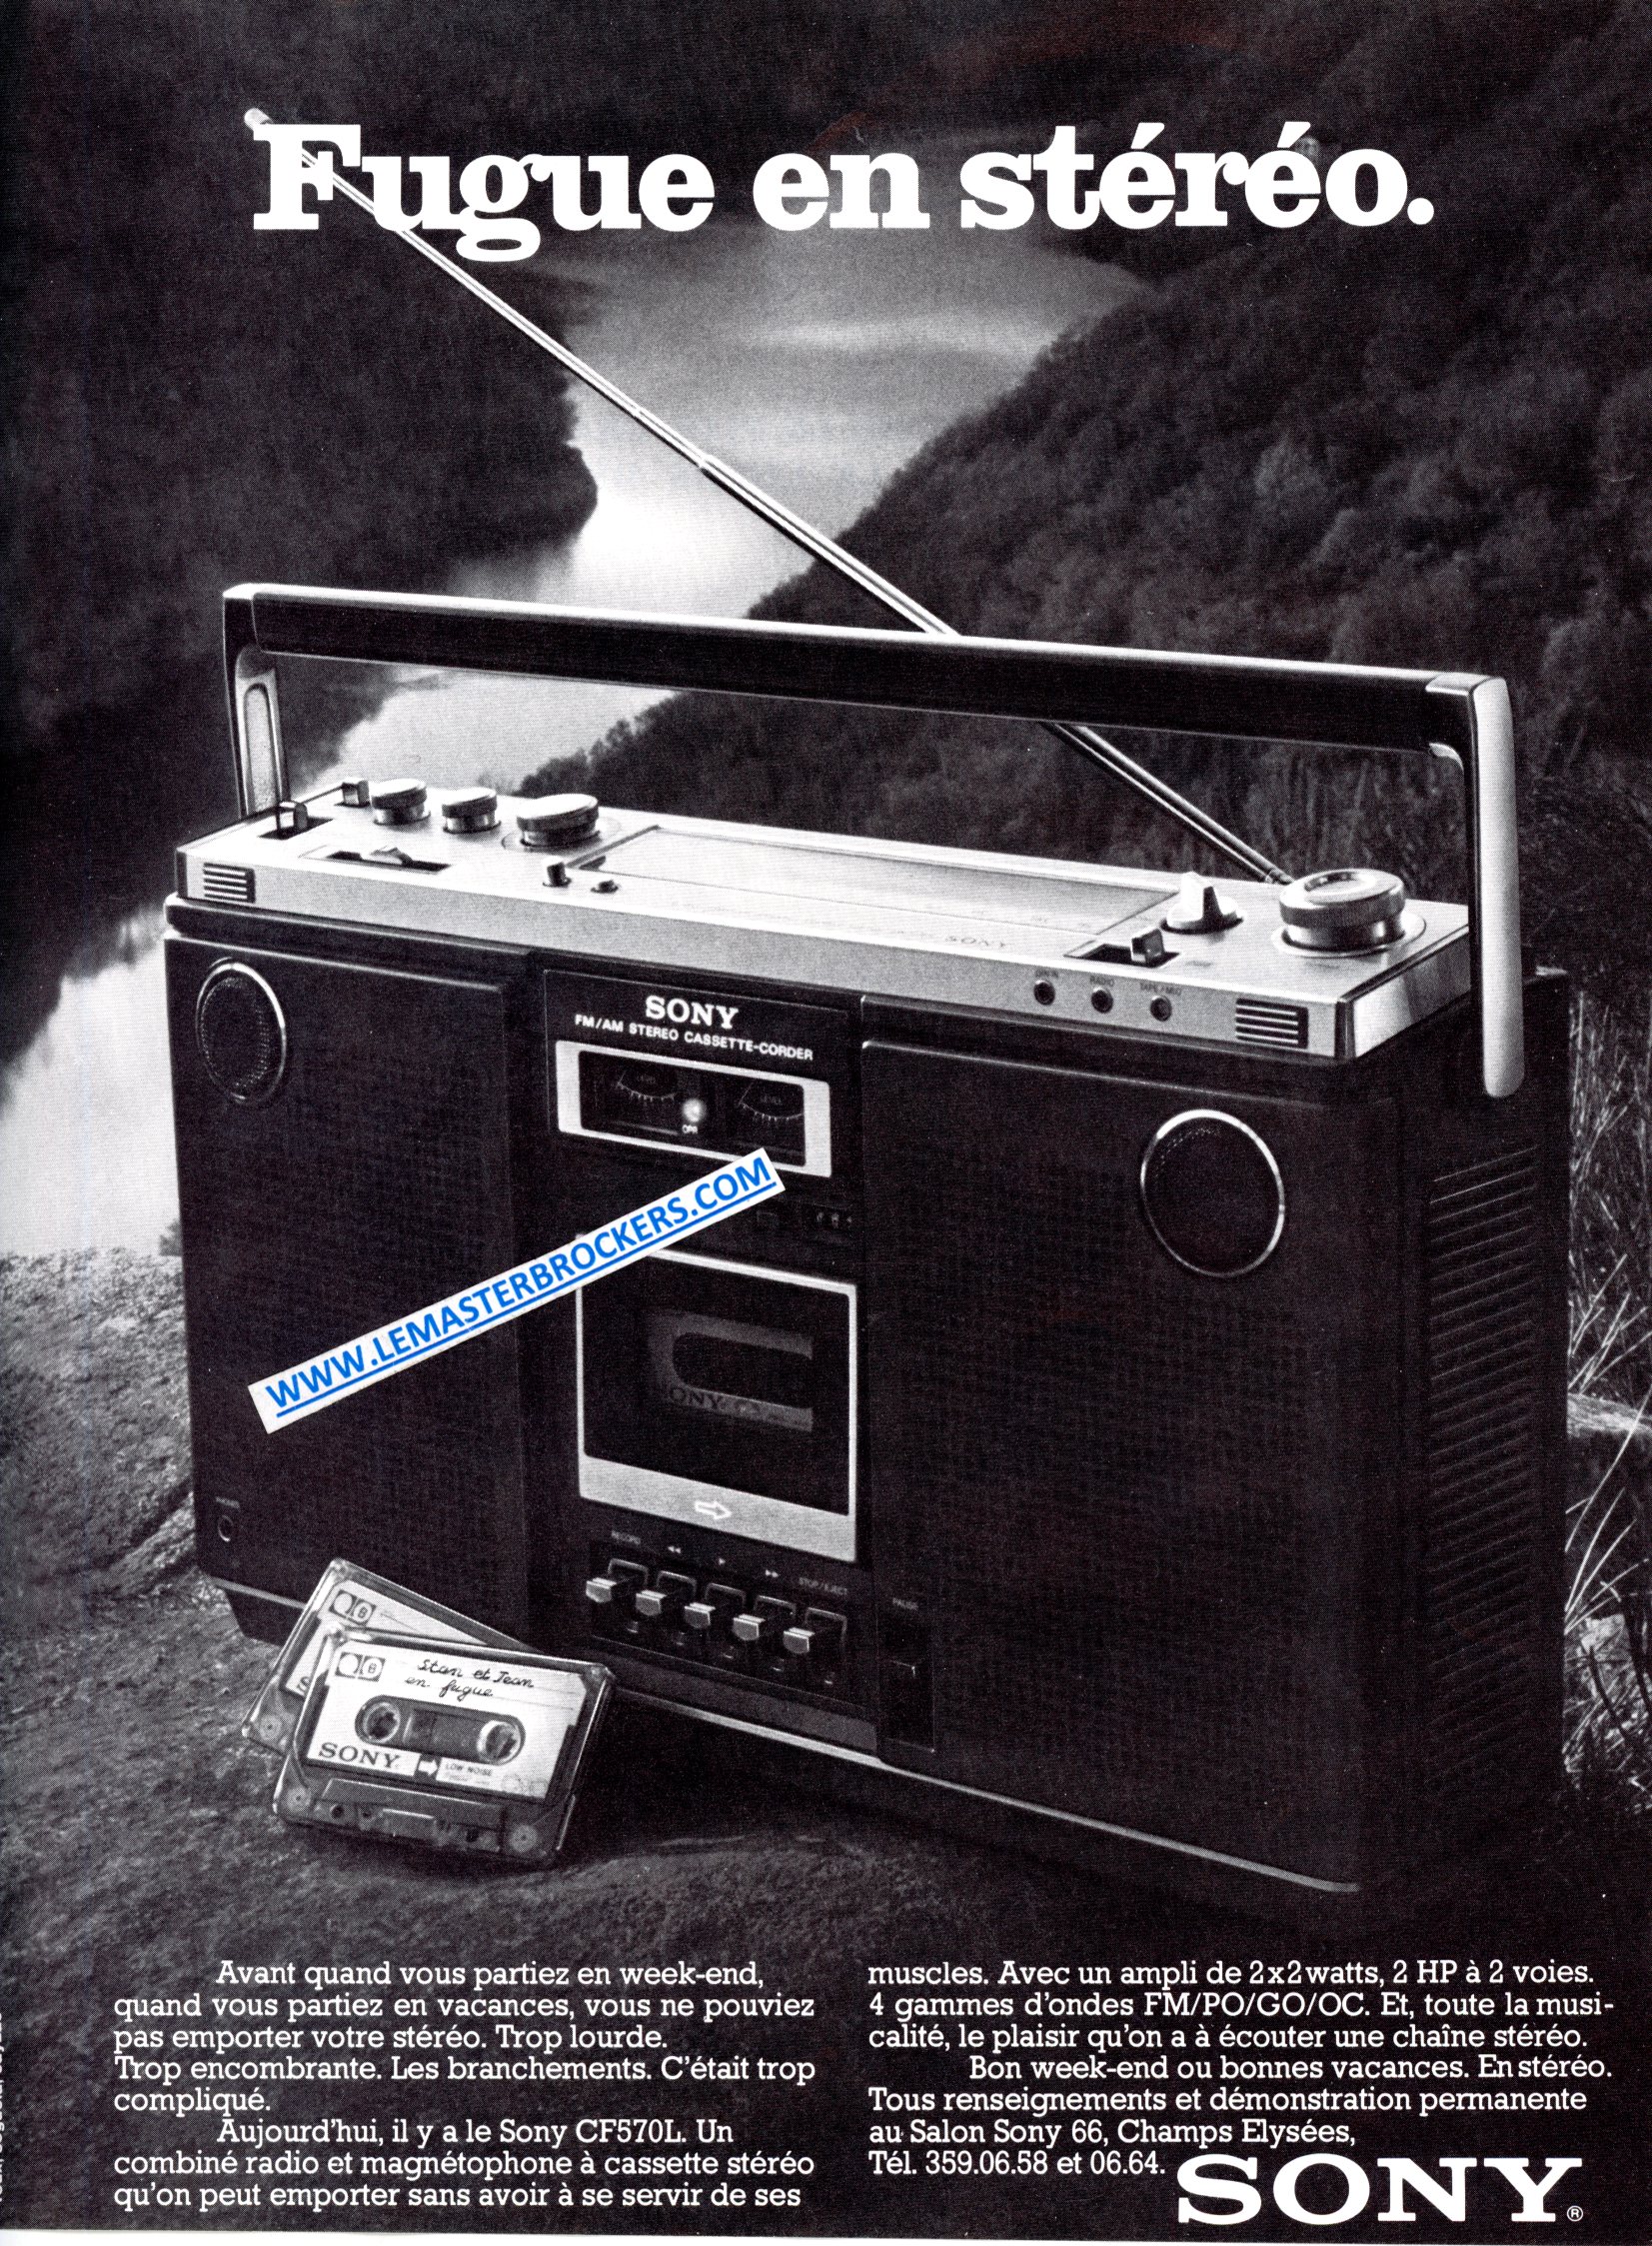 1977 SONY CF570L RADIO MAGNETOPHONE PUBLICITE - ADVERTISEMENT SONY 1977